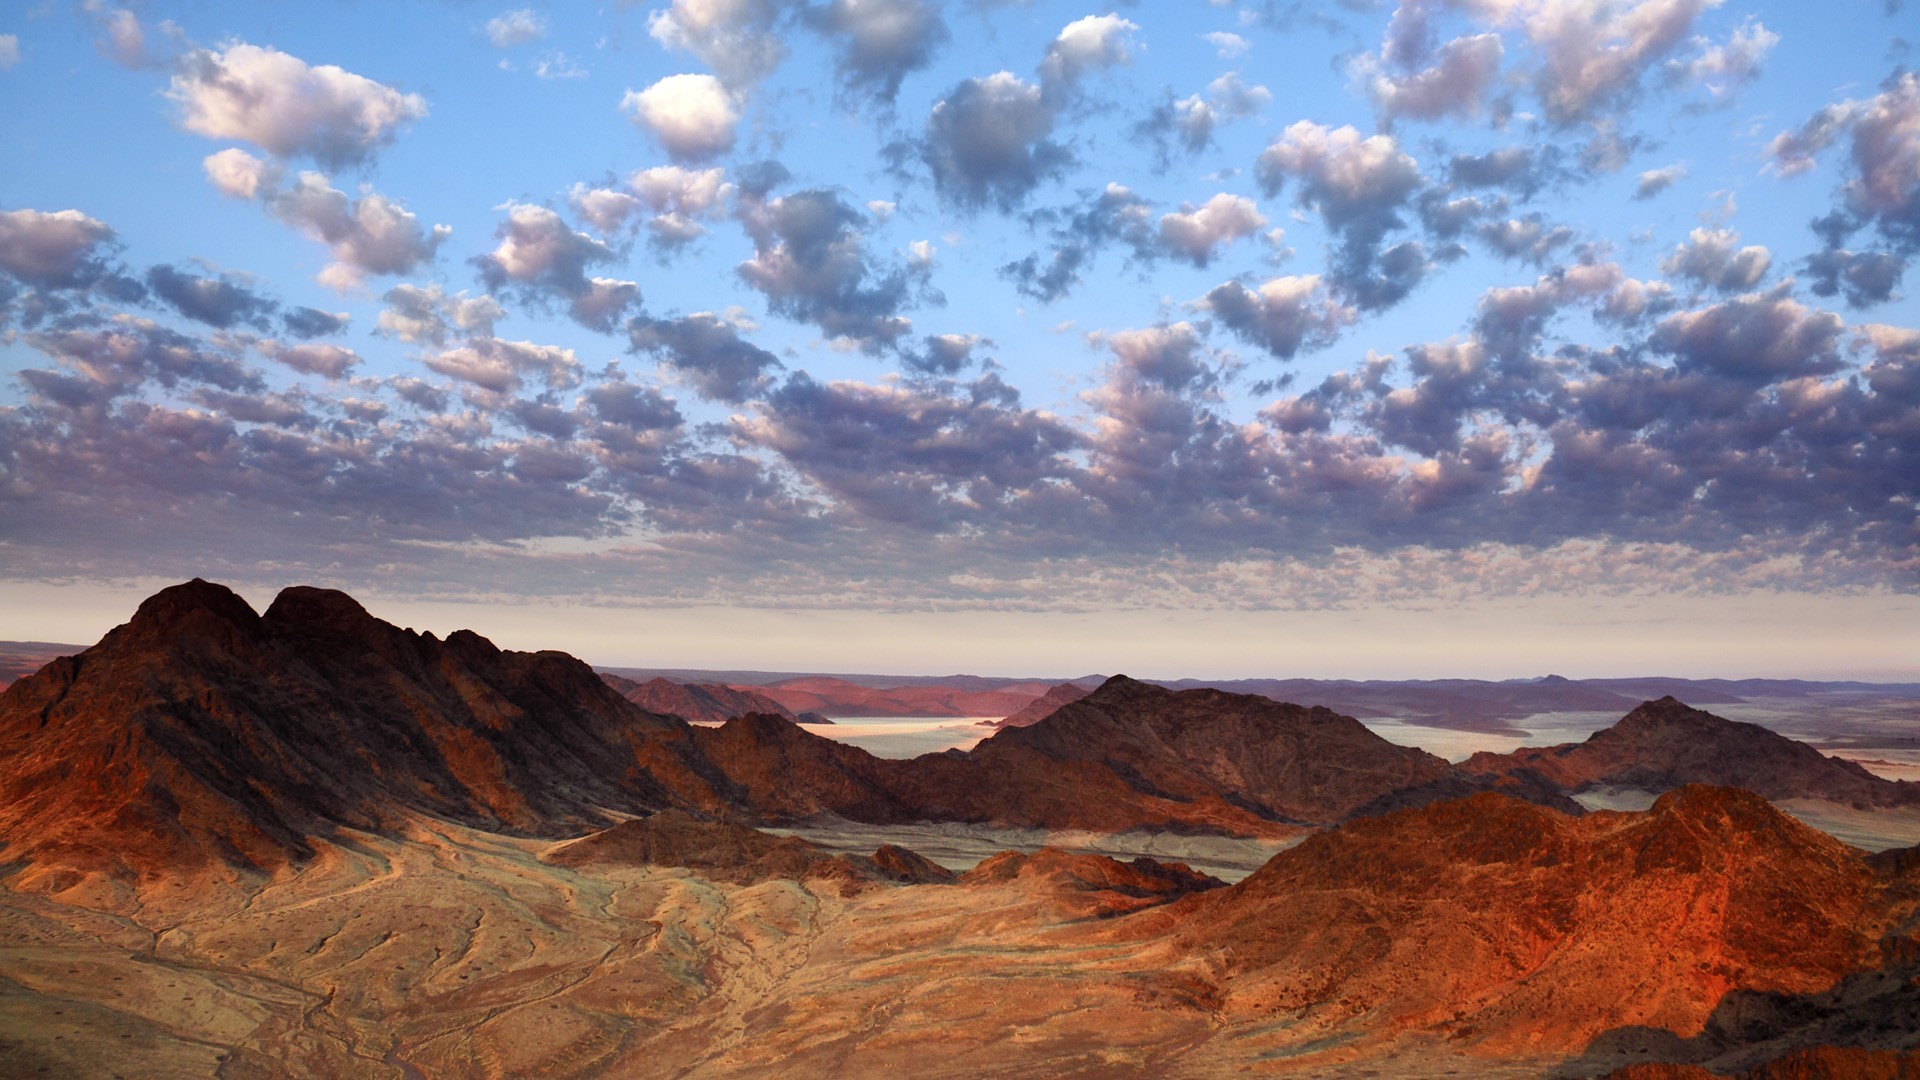 namibia wallpaper,sky,mountainous landforms,nature,natural landscape,badlands